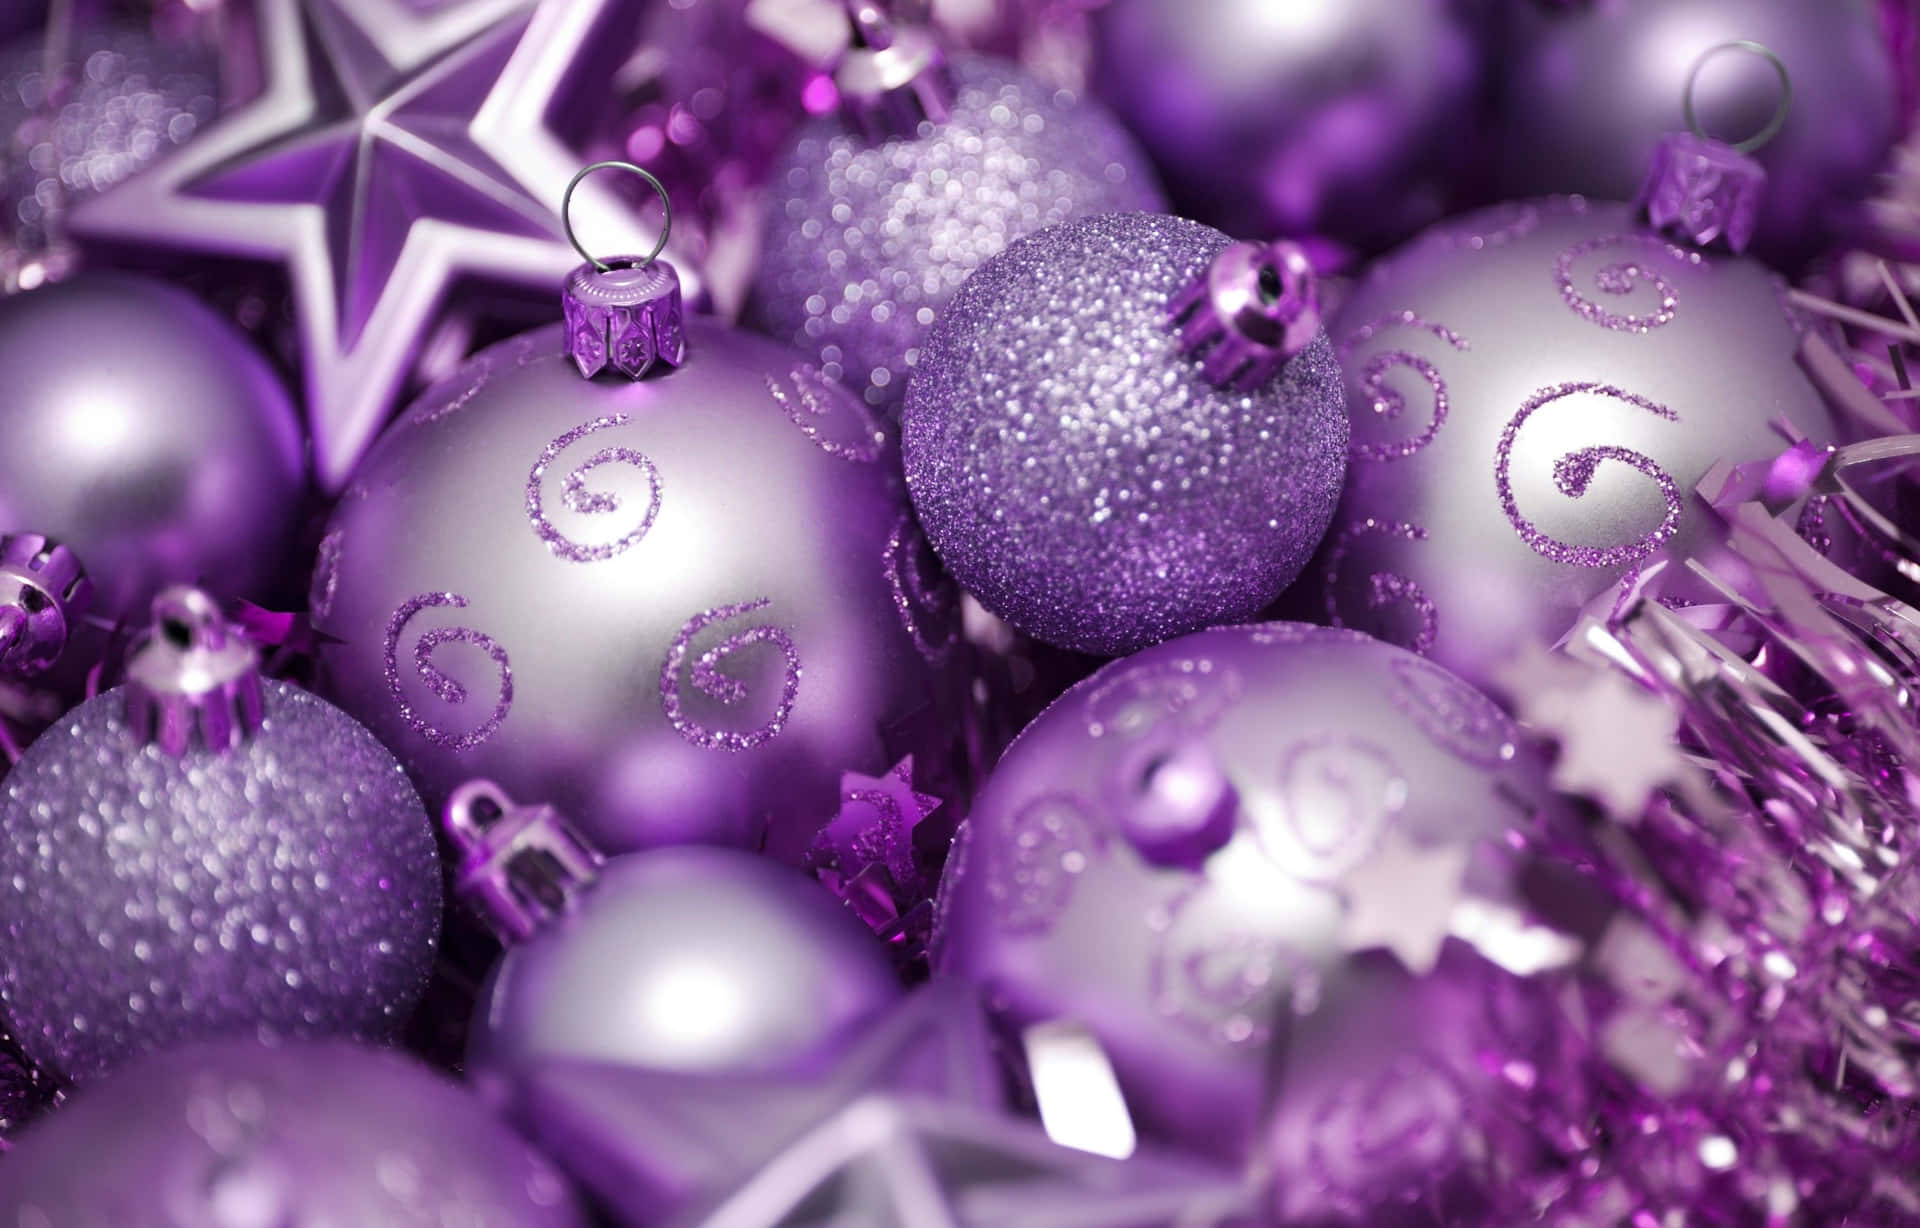 Caption: Festive Purple Christmas Background